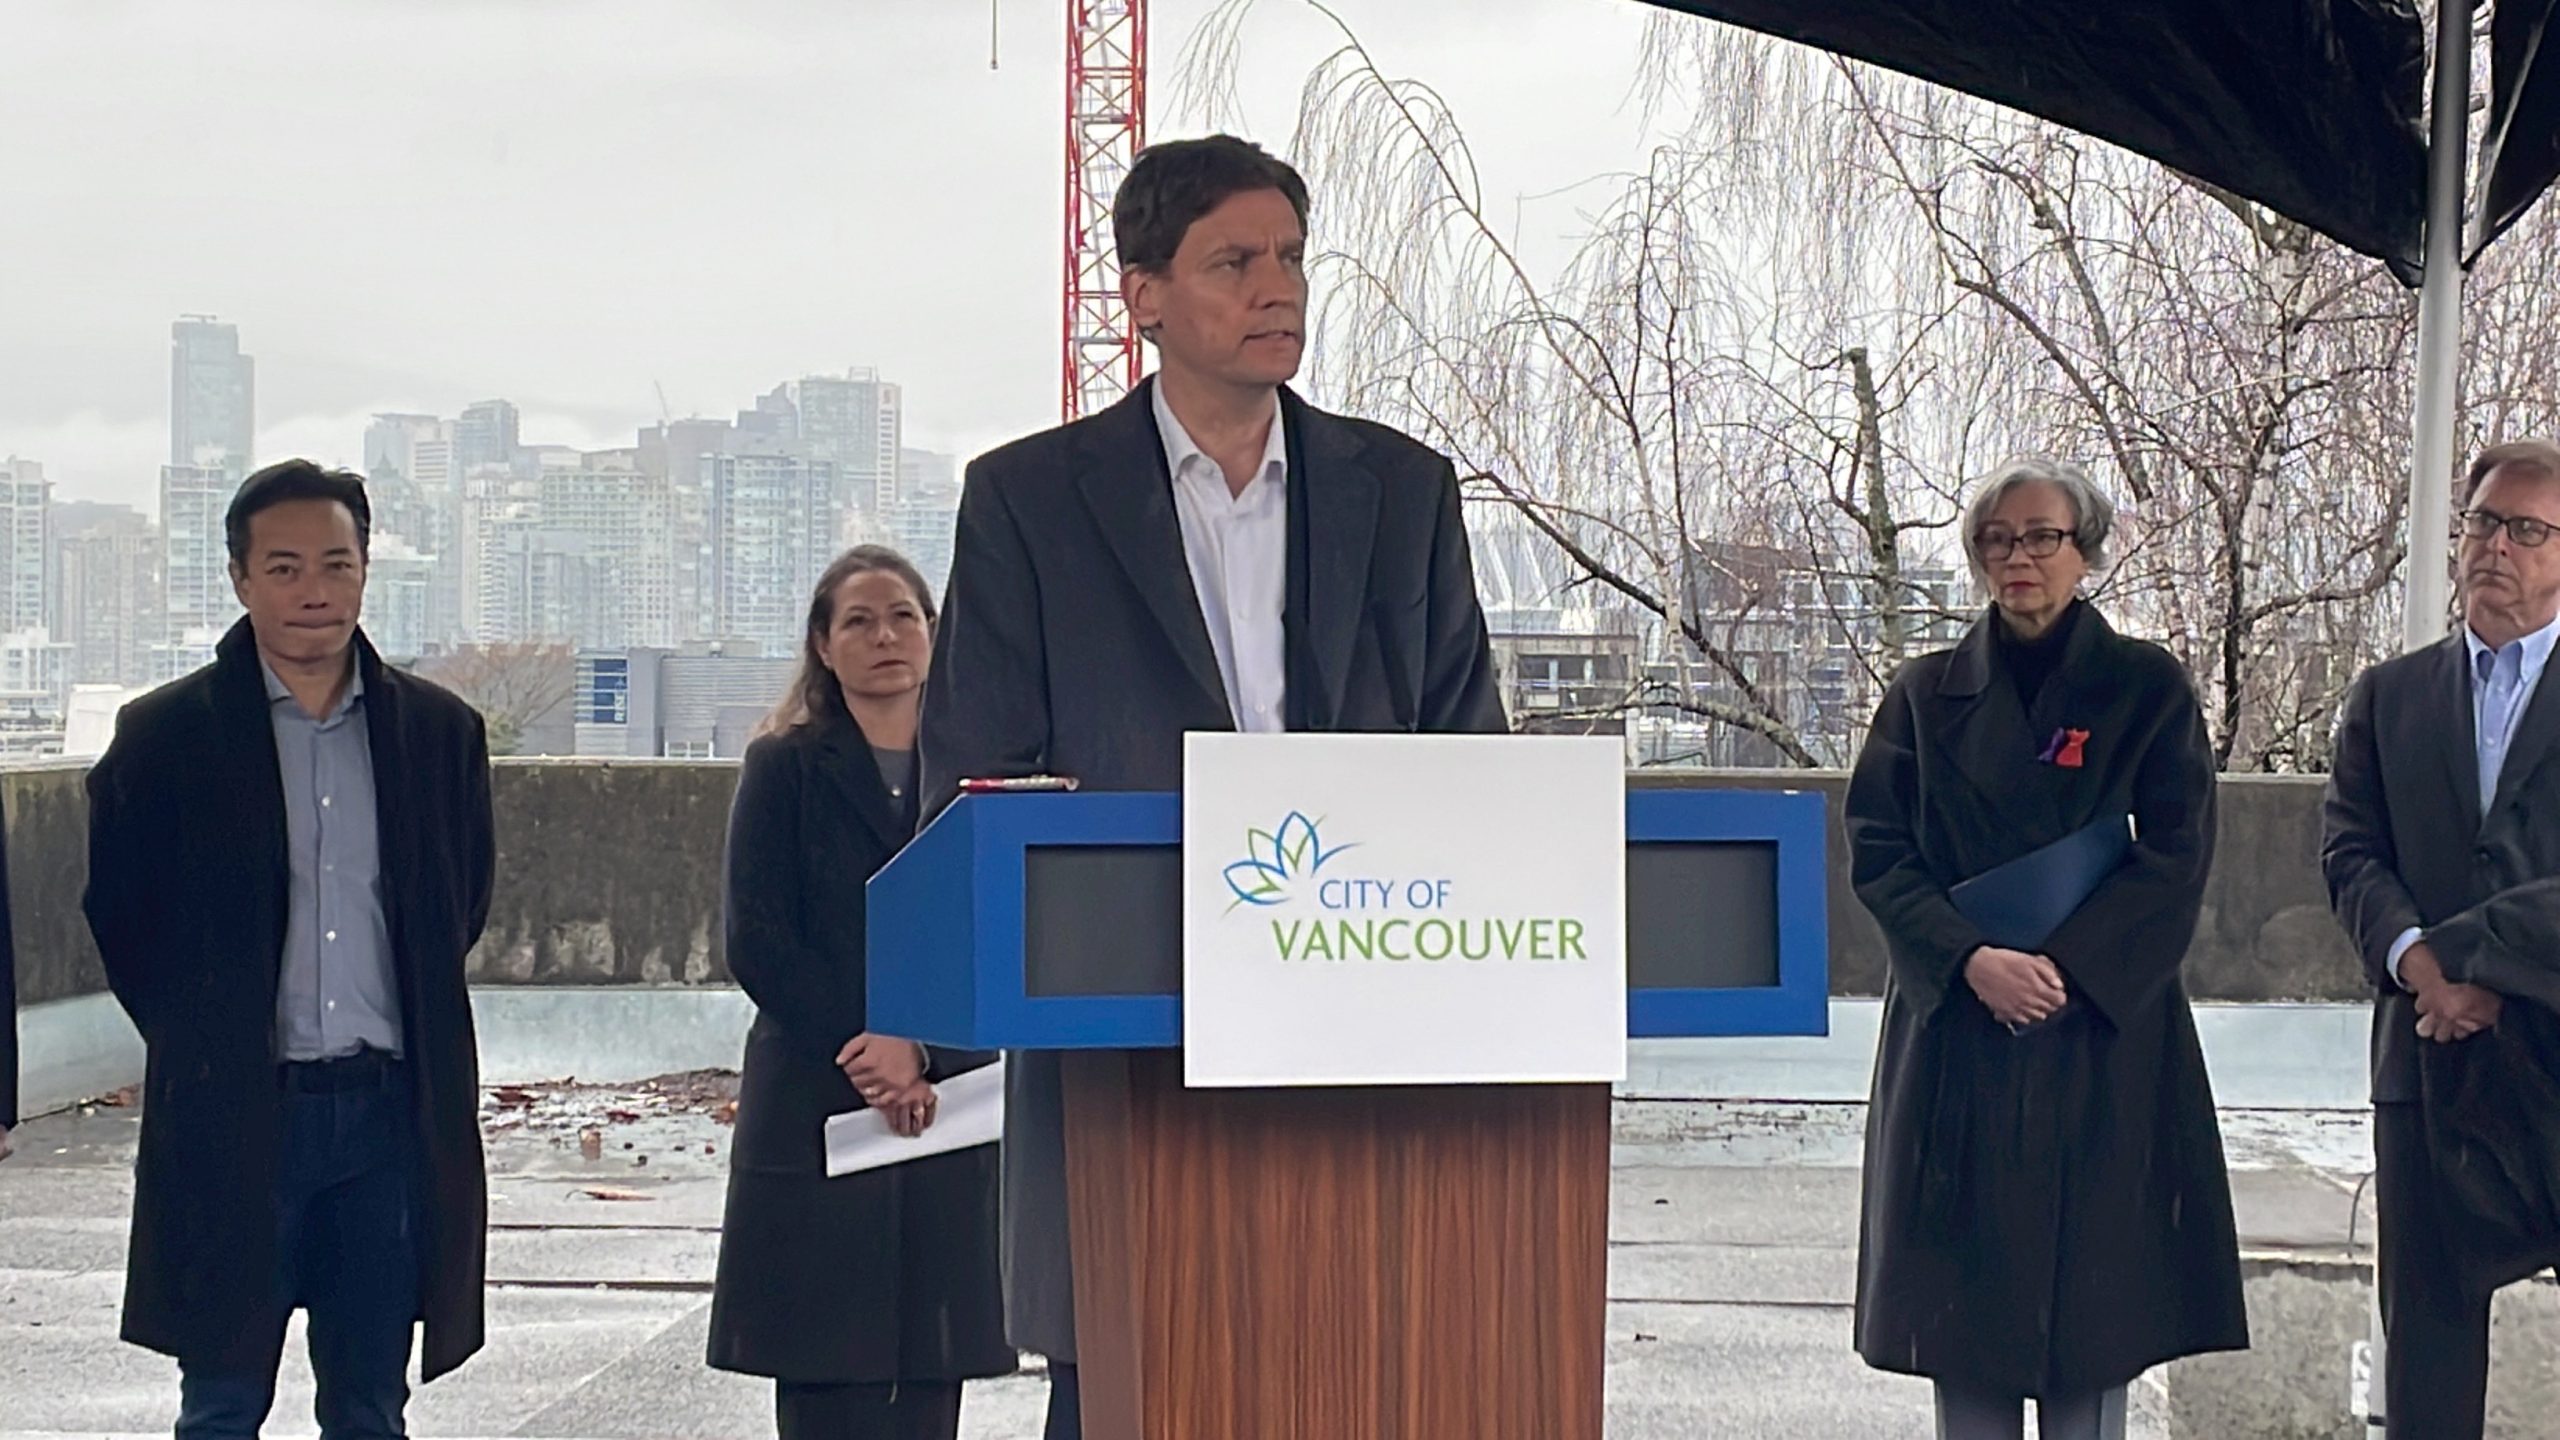 B.C. Premier David Eby talking at a podium, behind him is Vancouver Mayor Ken Sim